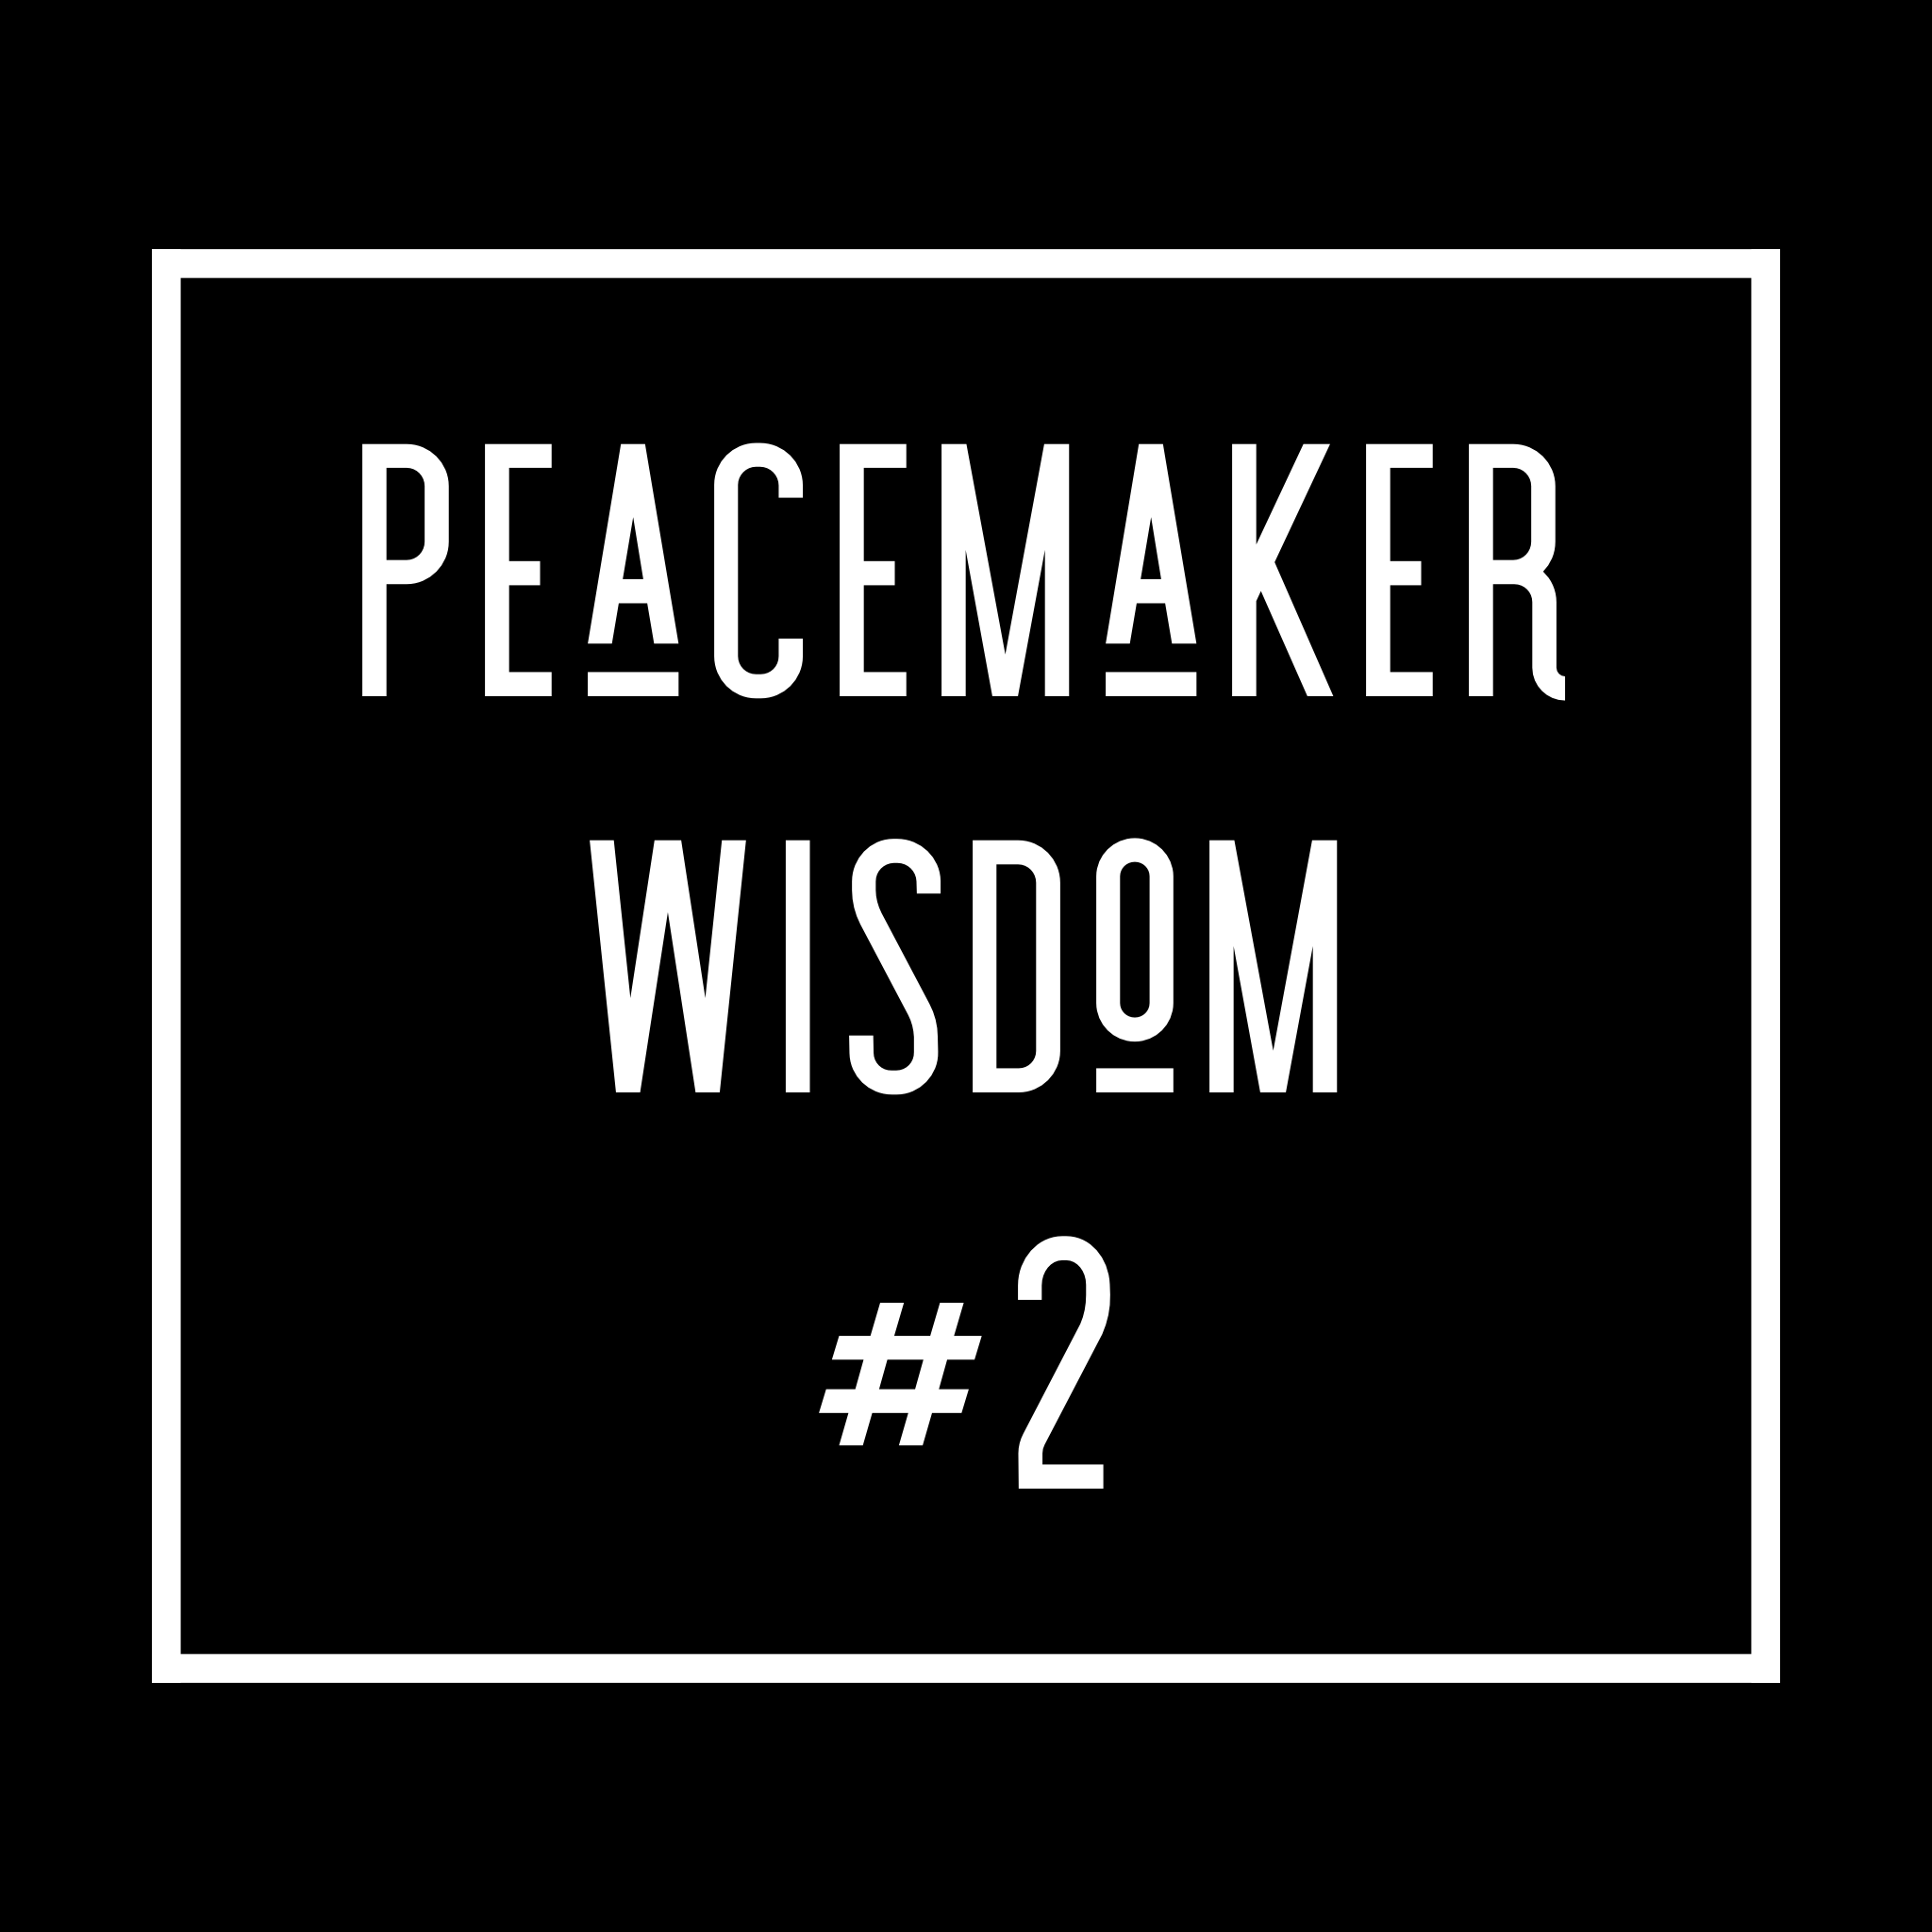 Peacemaker wisdom 2